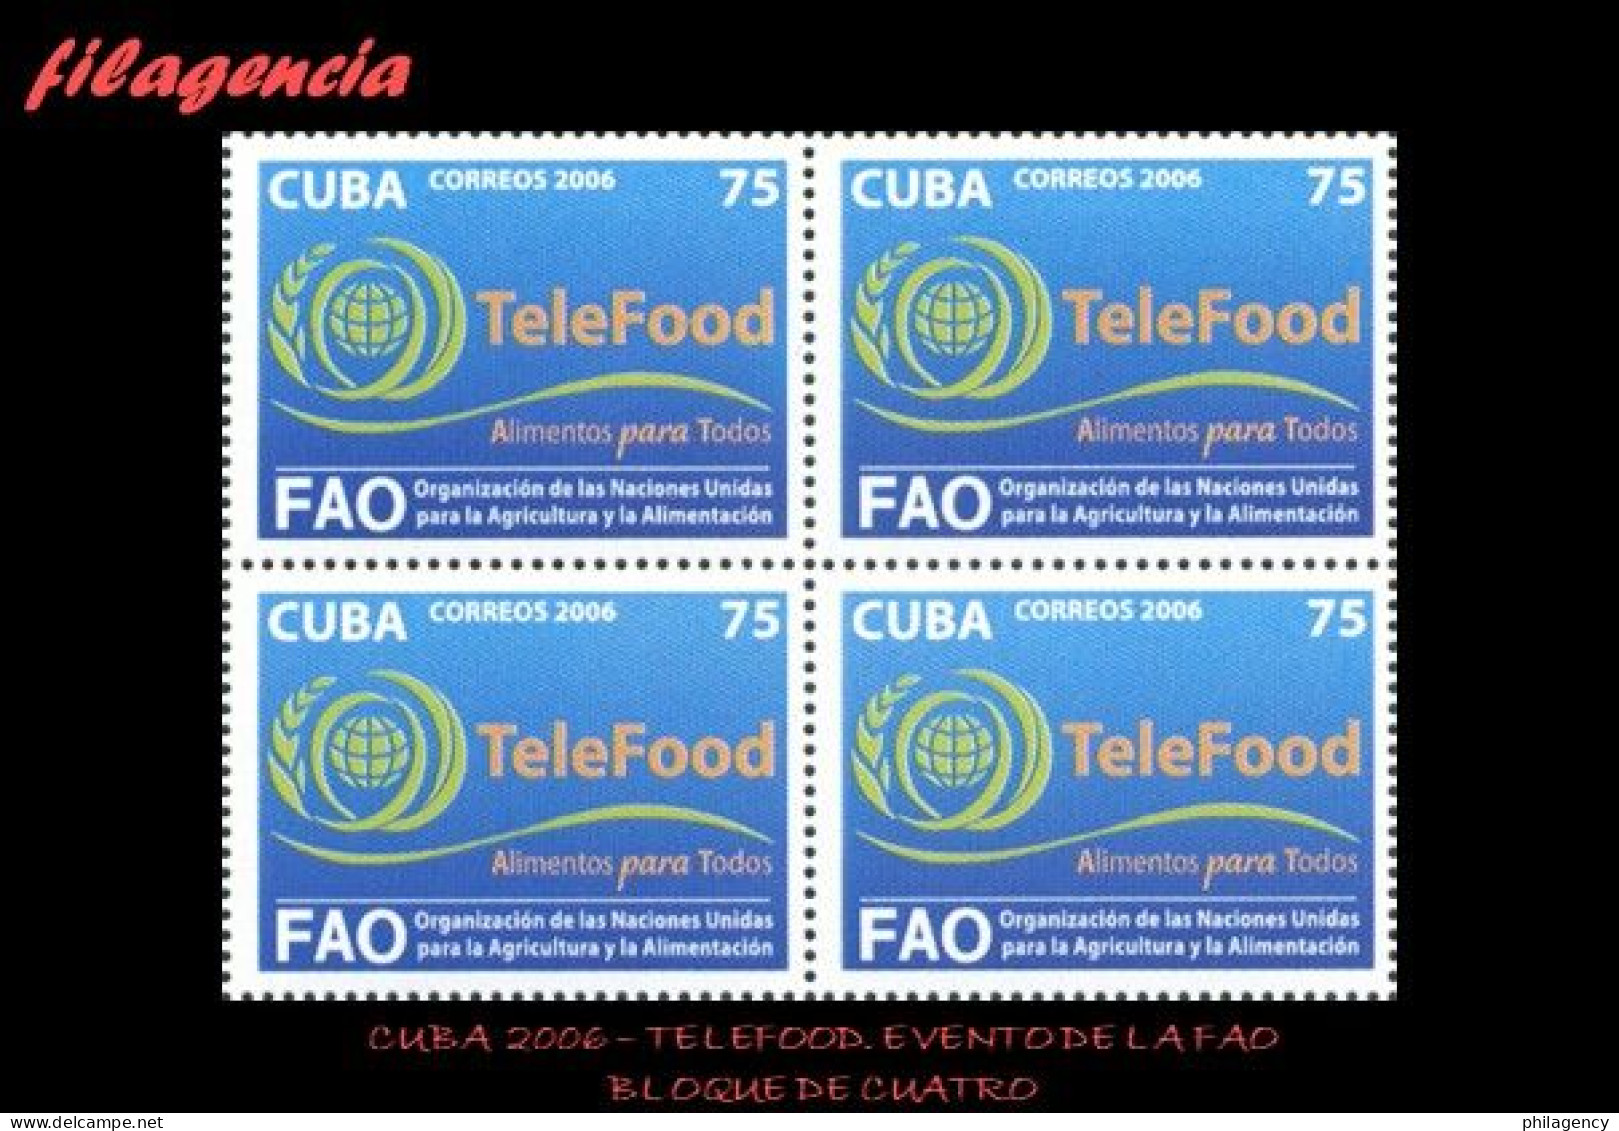 CUBA. BLOQUES DE CUATRO. 2006-29 EVENTO DE LA FAO TELEFOOD - Ungebraucht